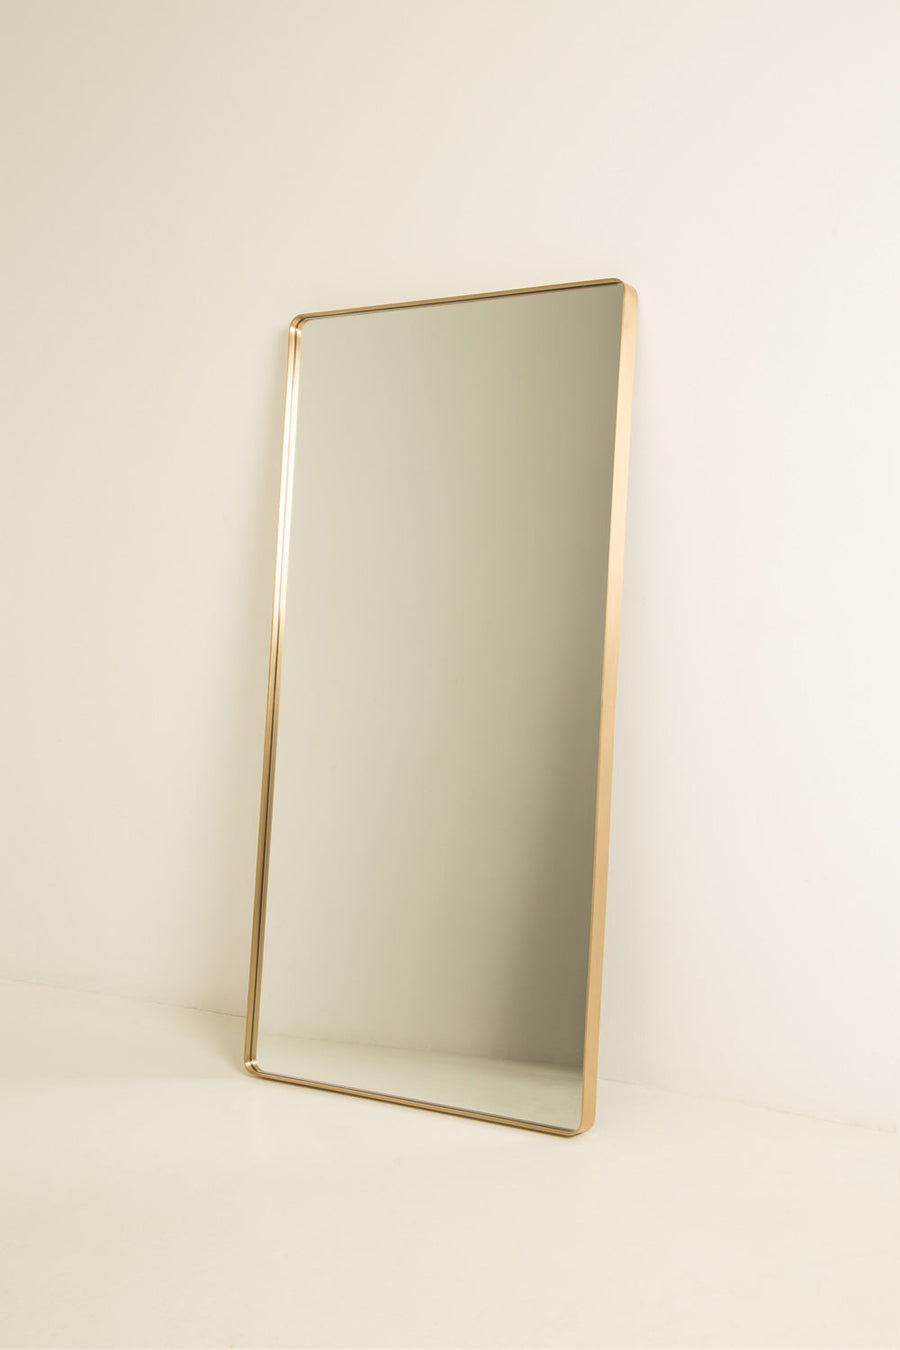 Here Mirror Sample - 900 x 1200mm - Aged Brass